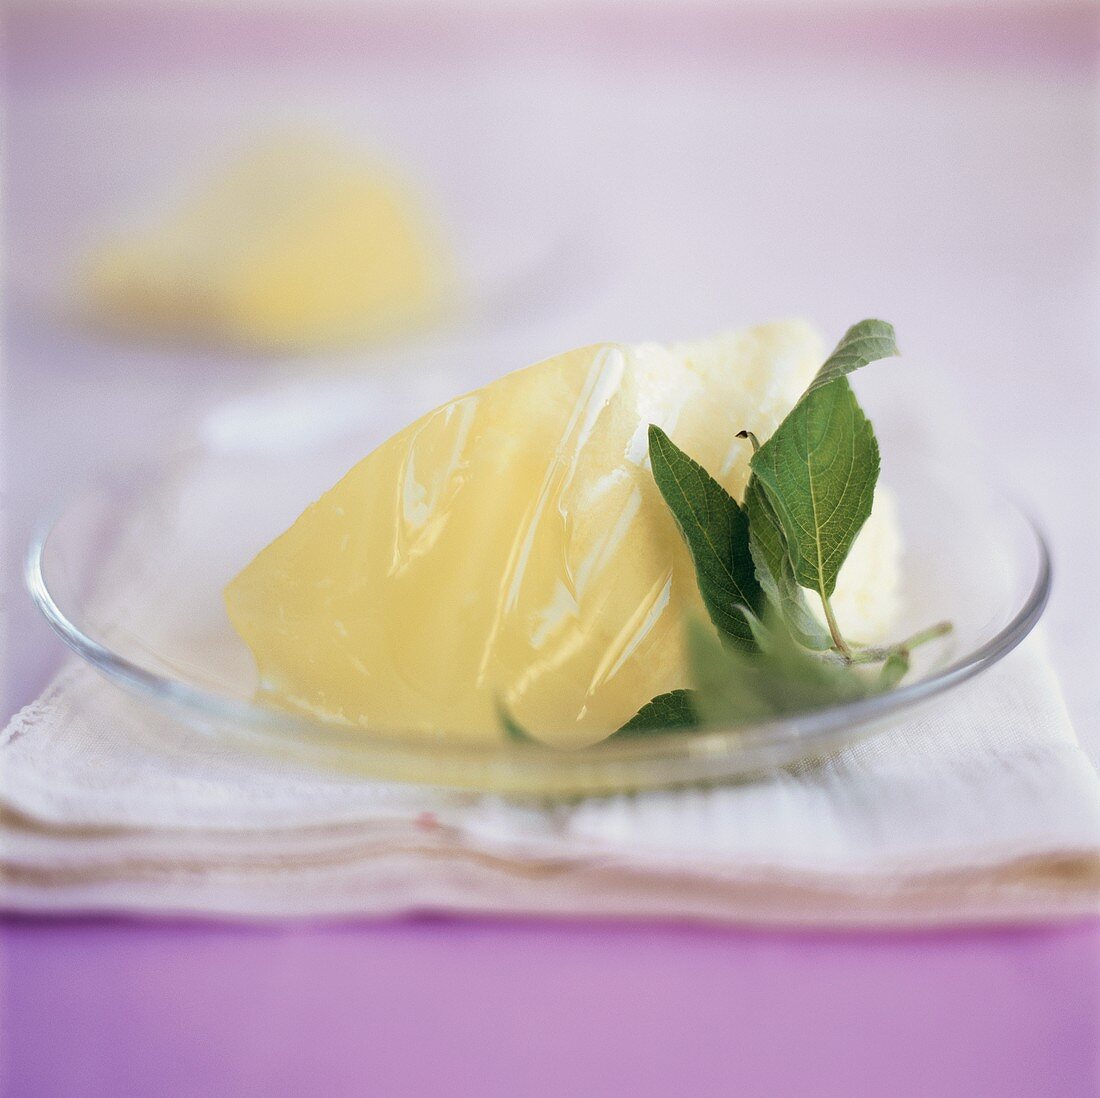 Lemon blancmange with fresh mint